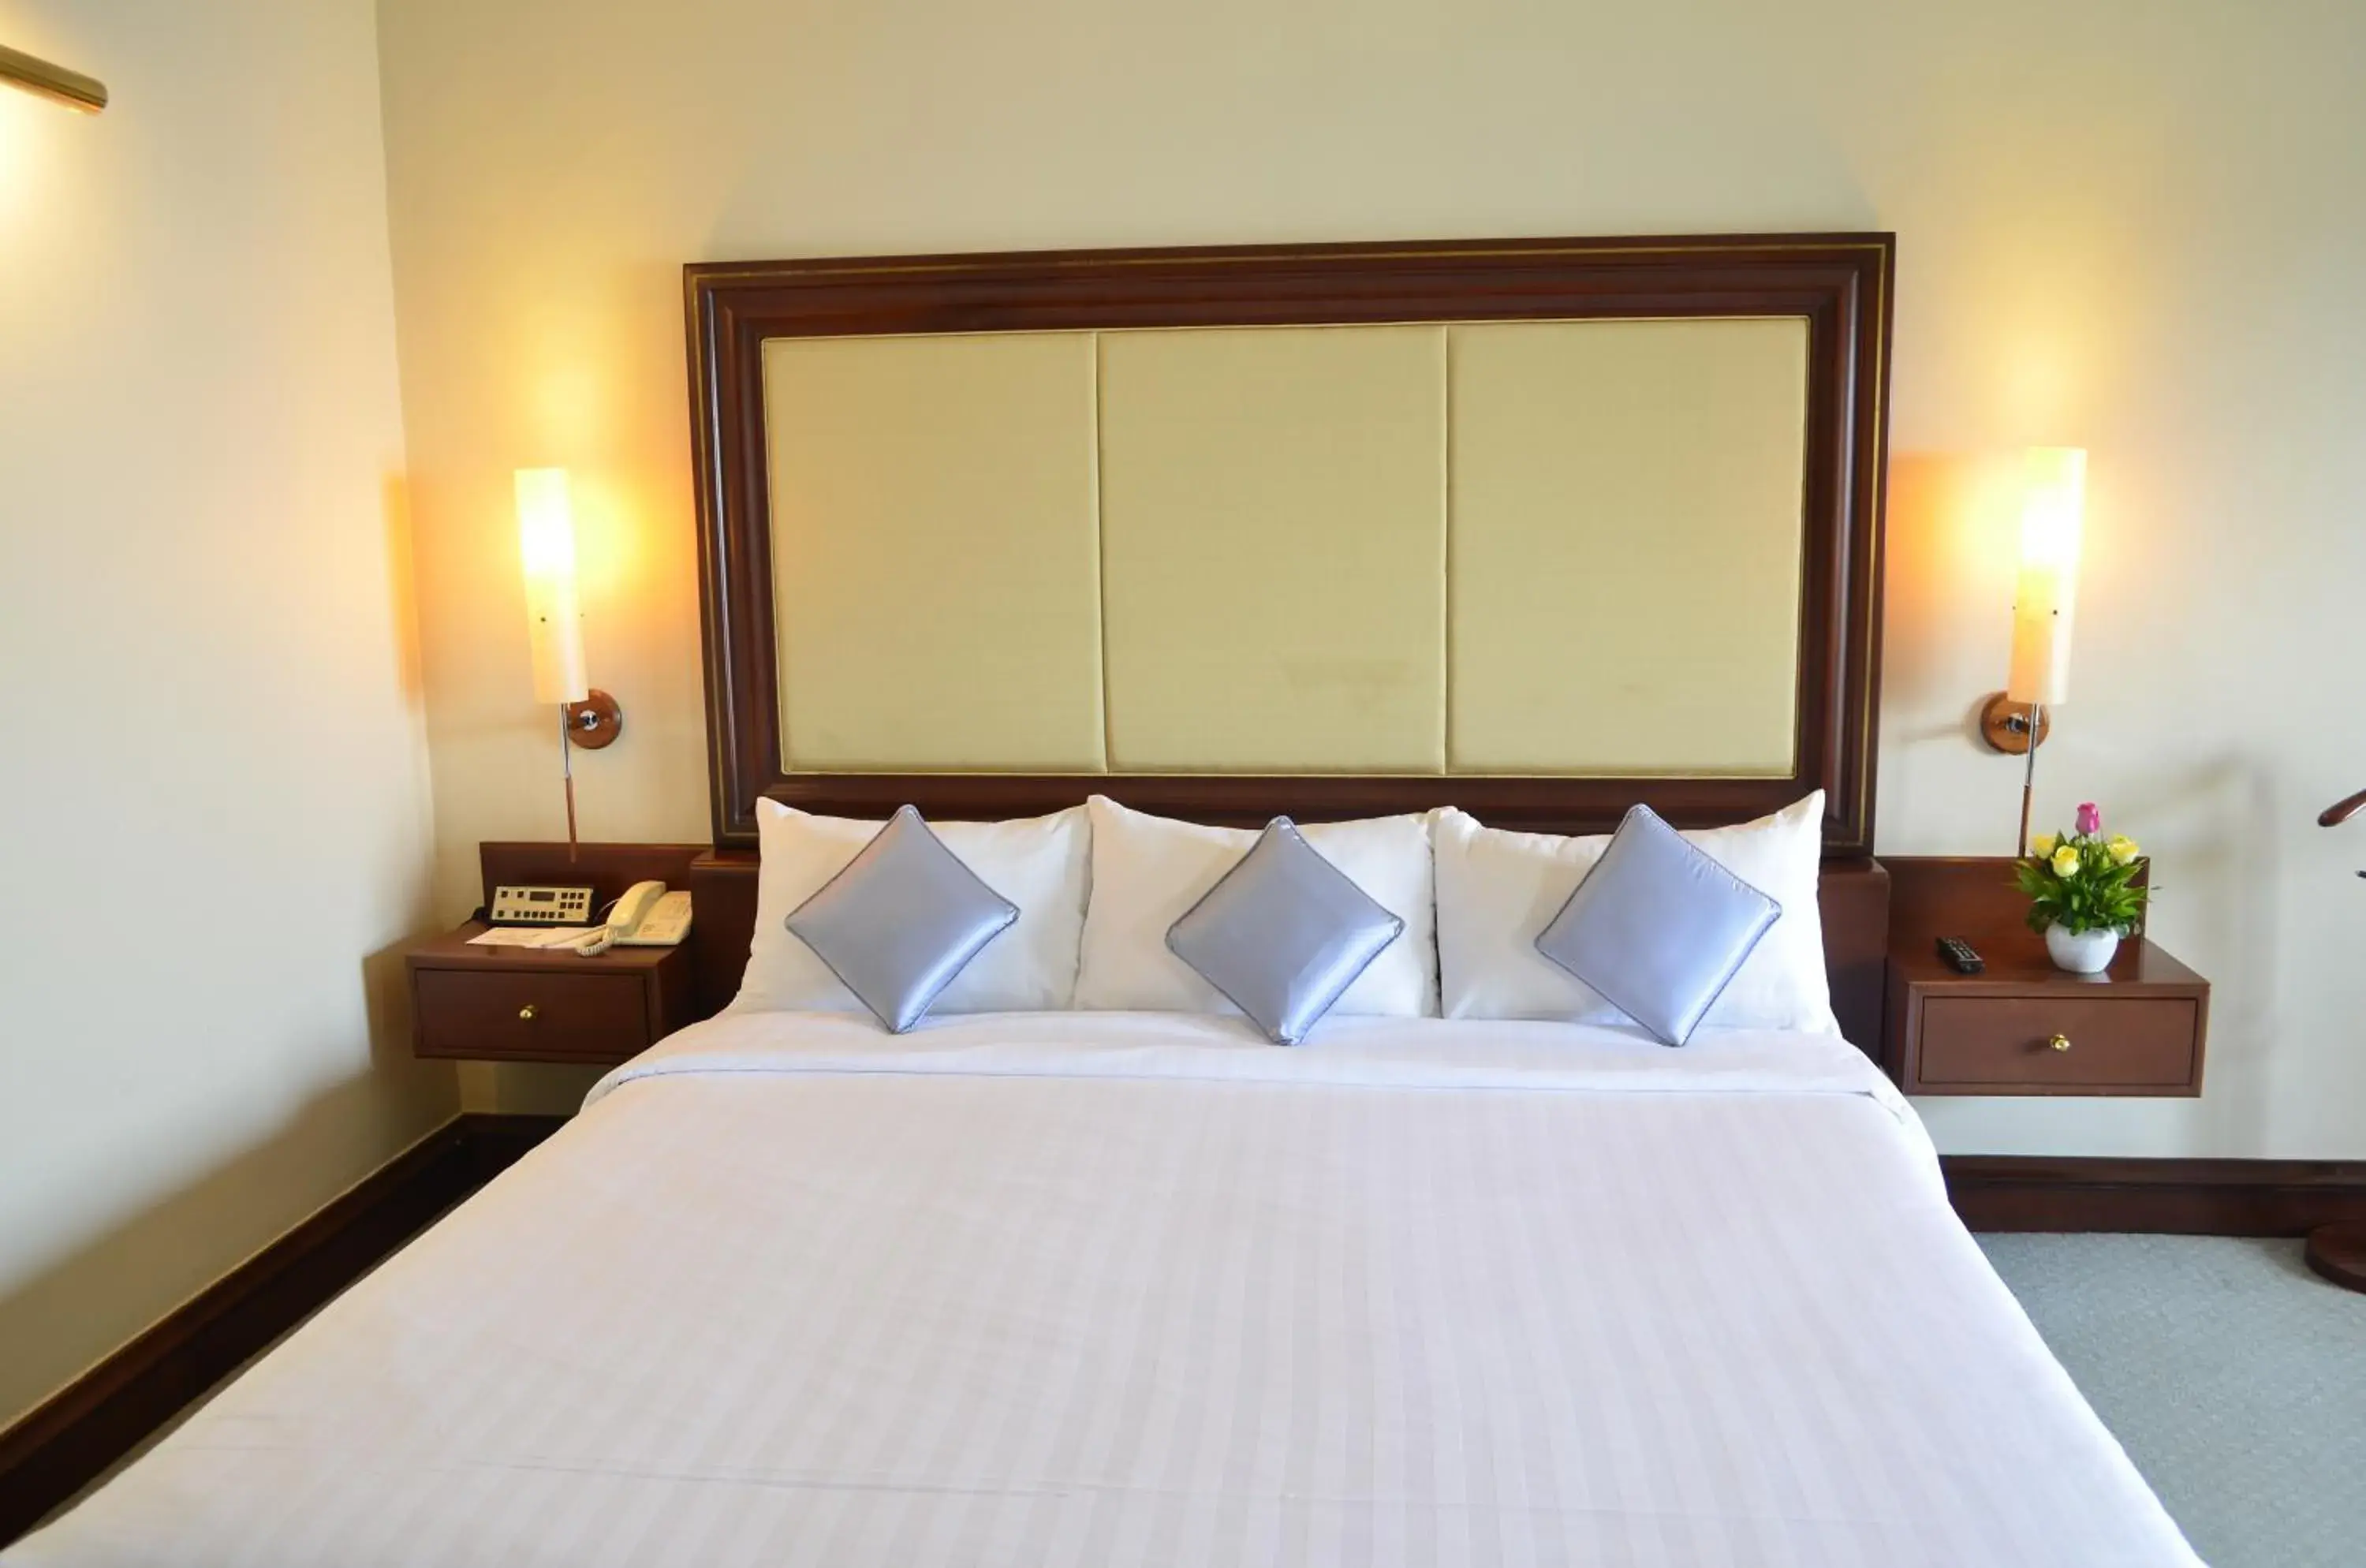 Bedroom, Room Photo in Hotel Cambodiana